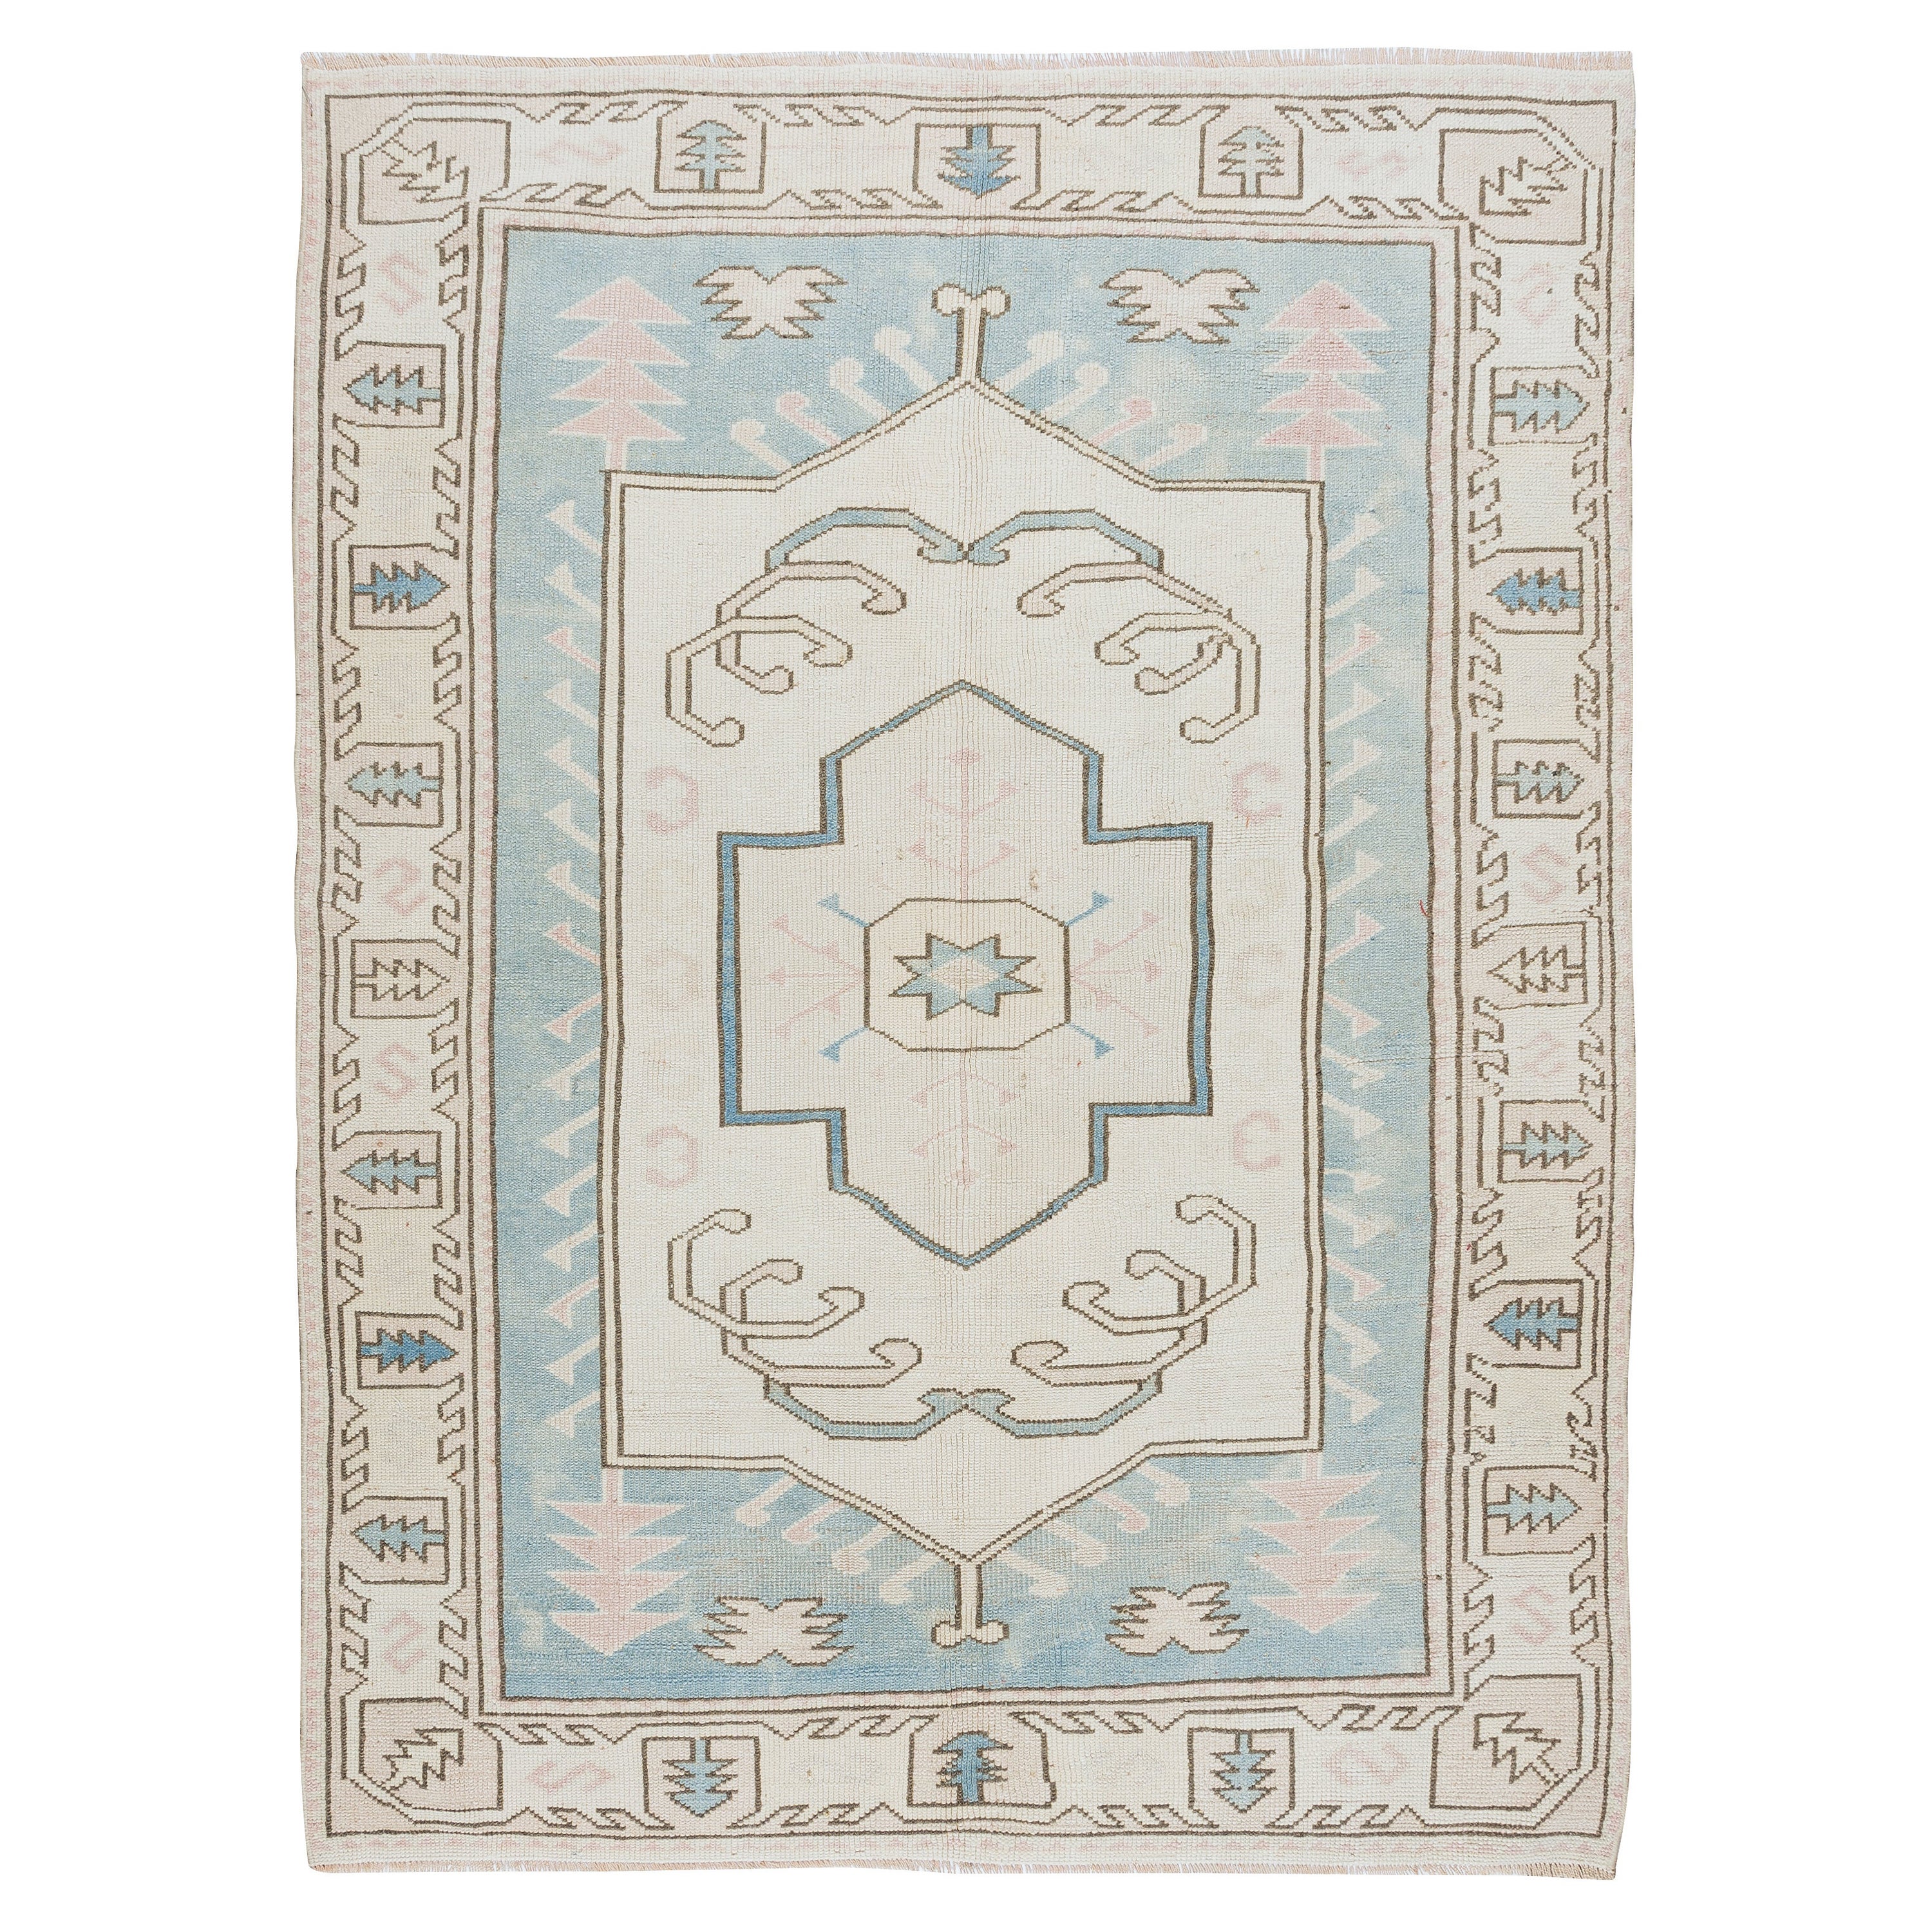 5x6.6 Ft Modern Handmade Turkish Geometric Wool Area Rug in Light Blue & Cream